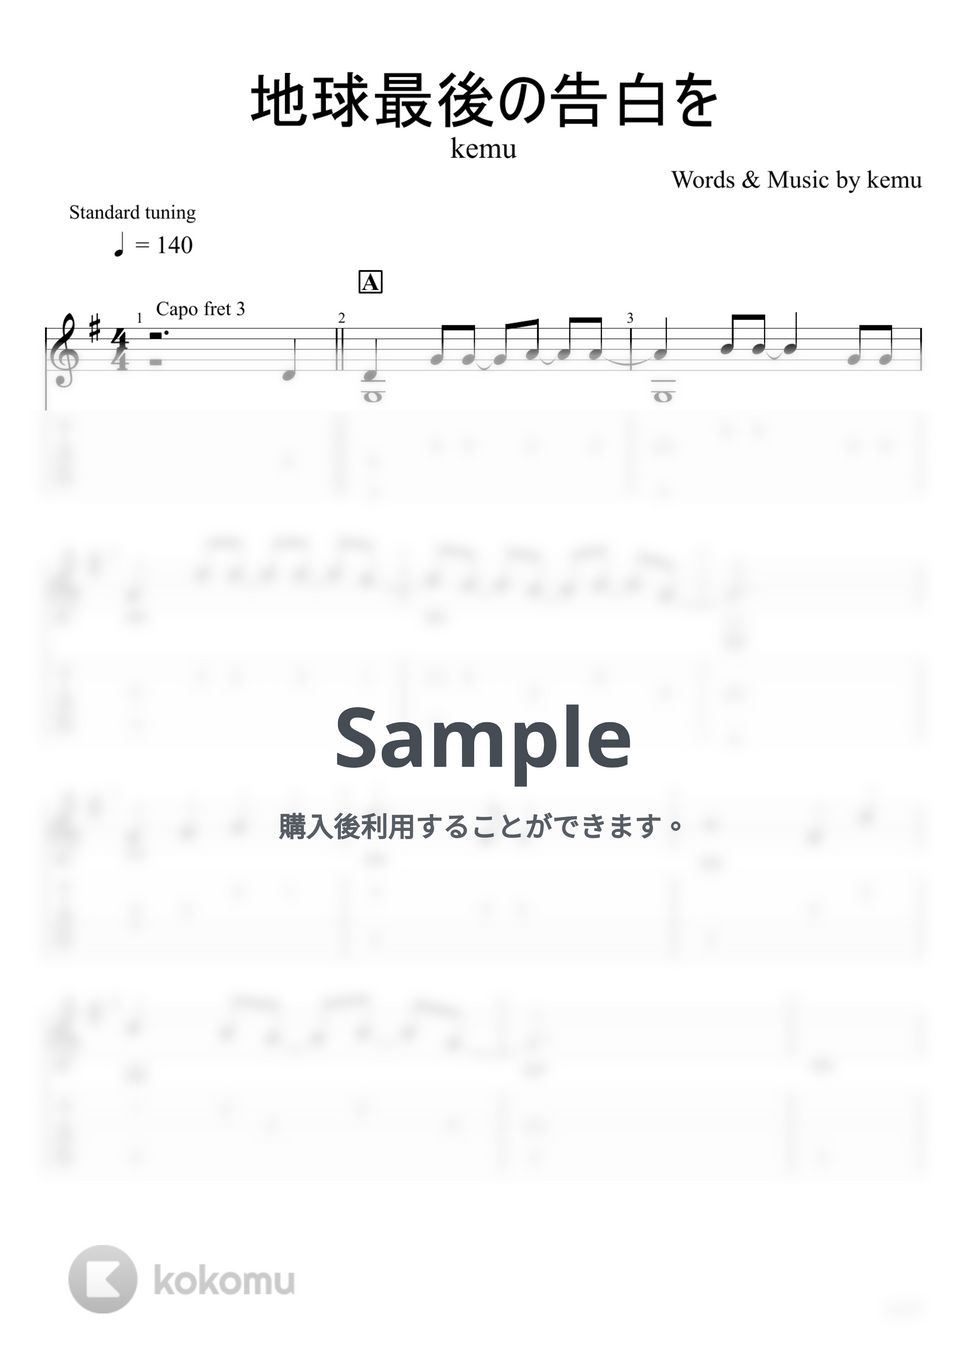 kemu - 地球最後の告白を (ソロギター) by u3danchou